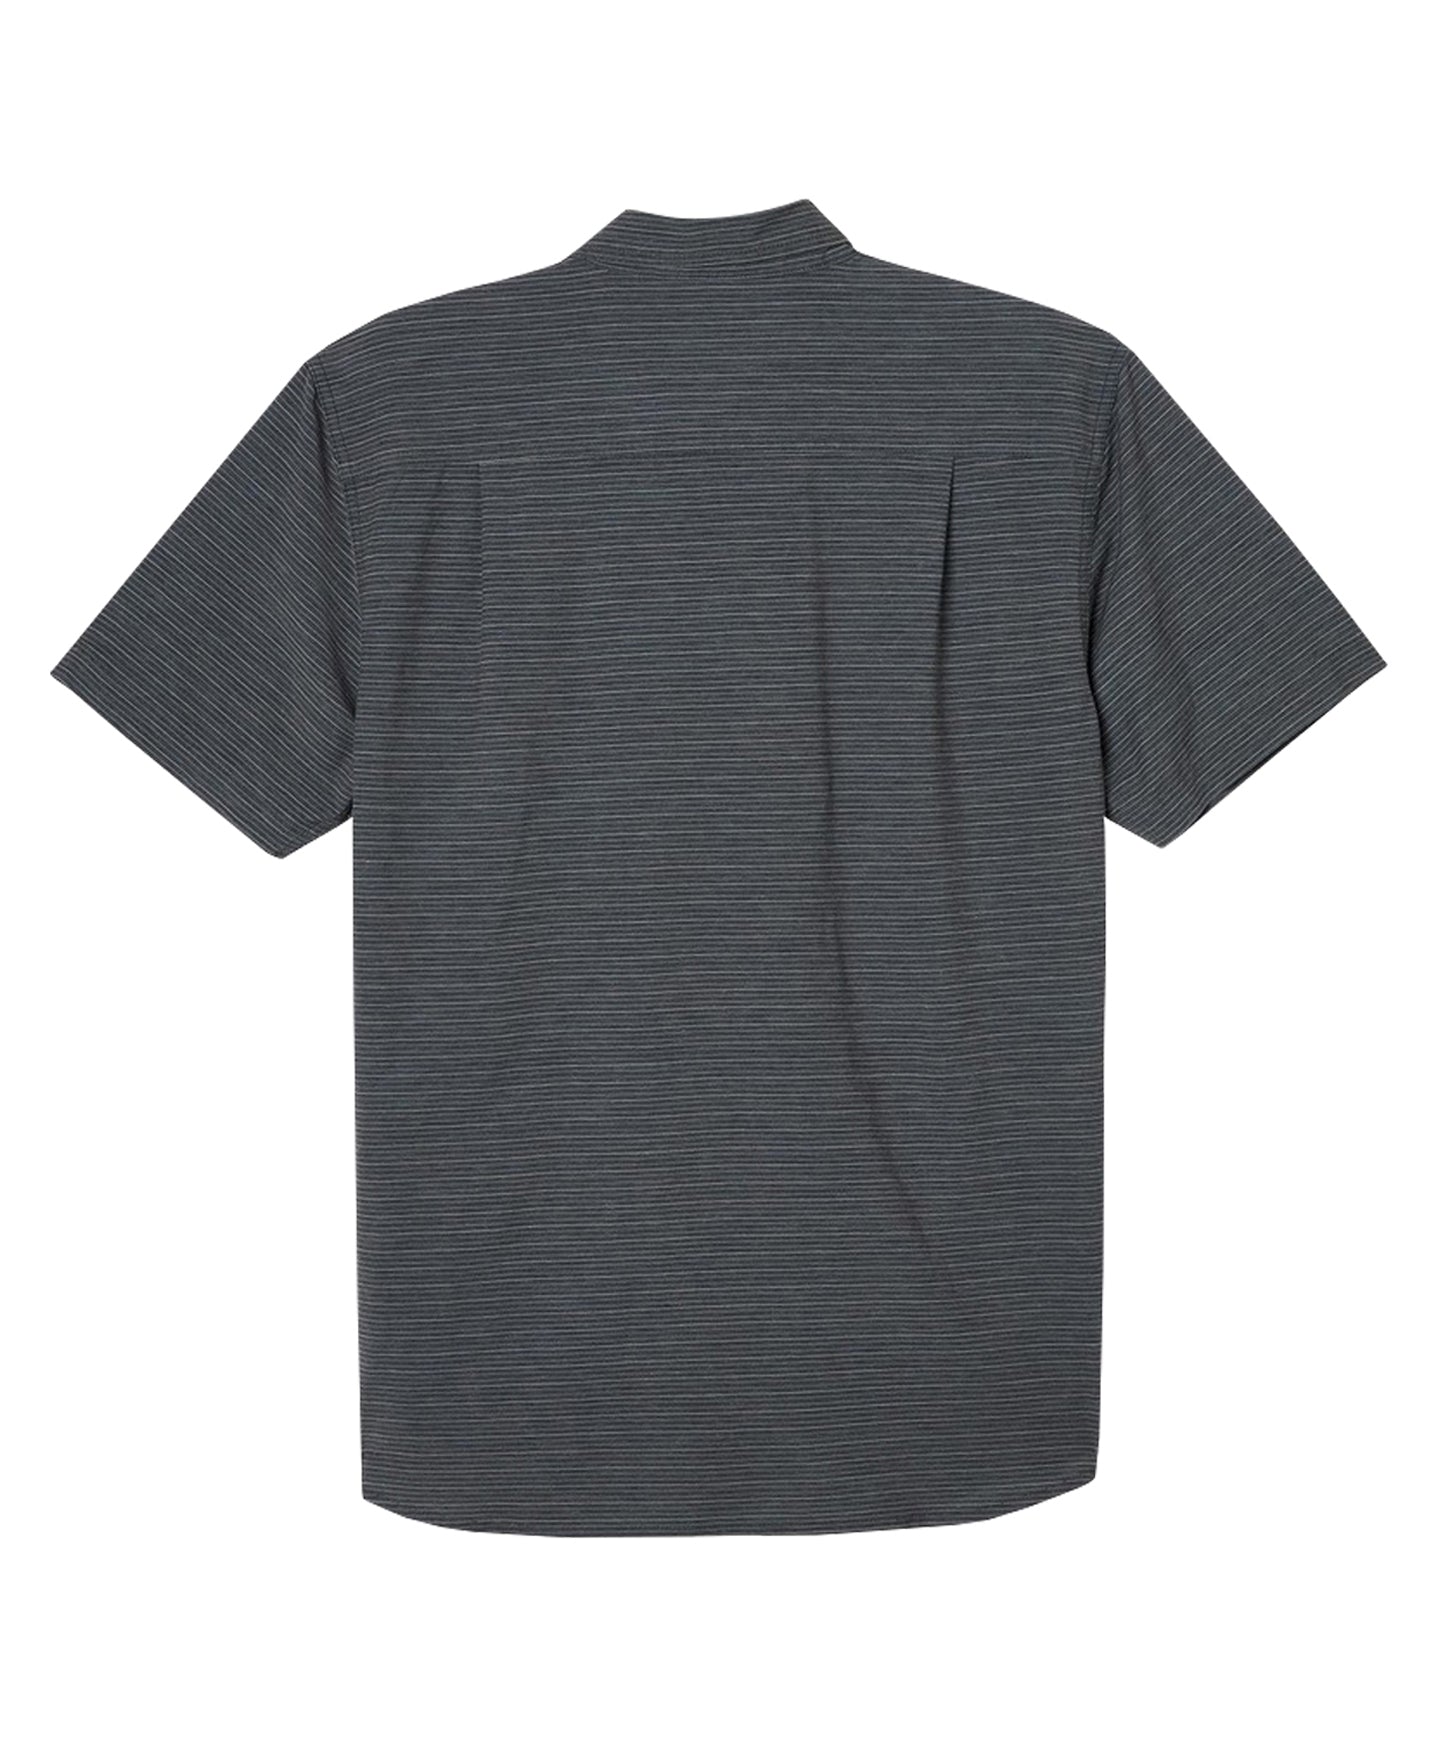 TRVLR Traverse Short Sleeve  Shirt - Black